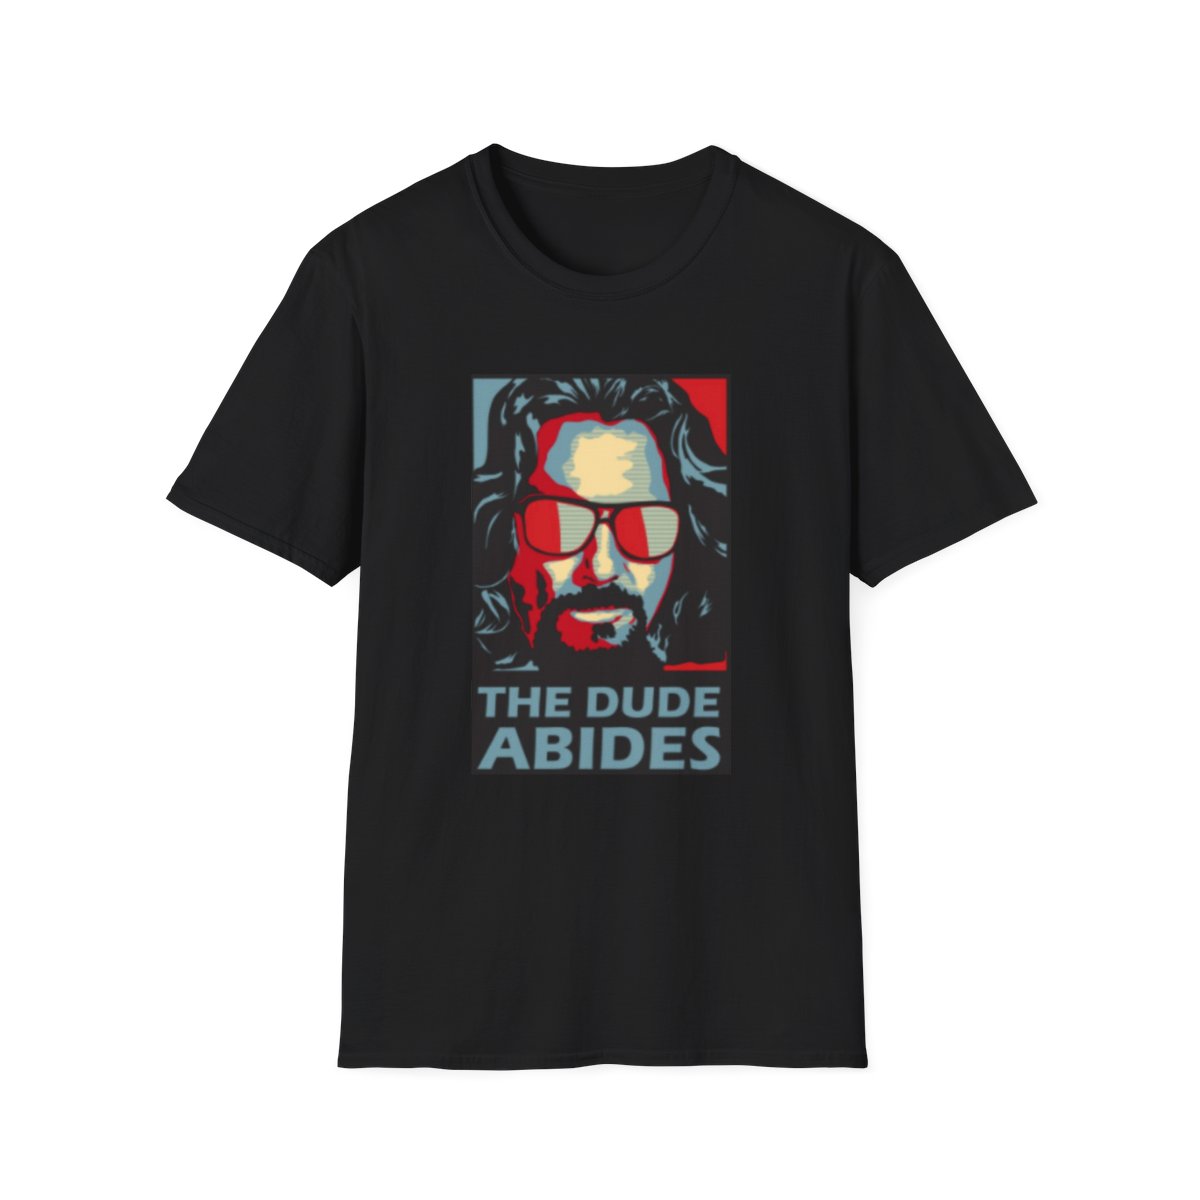 The DUDE ABIDES Big Lebowski- Tee Shirt product thumbnail image